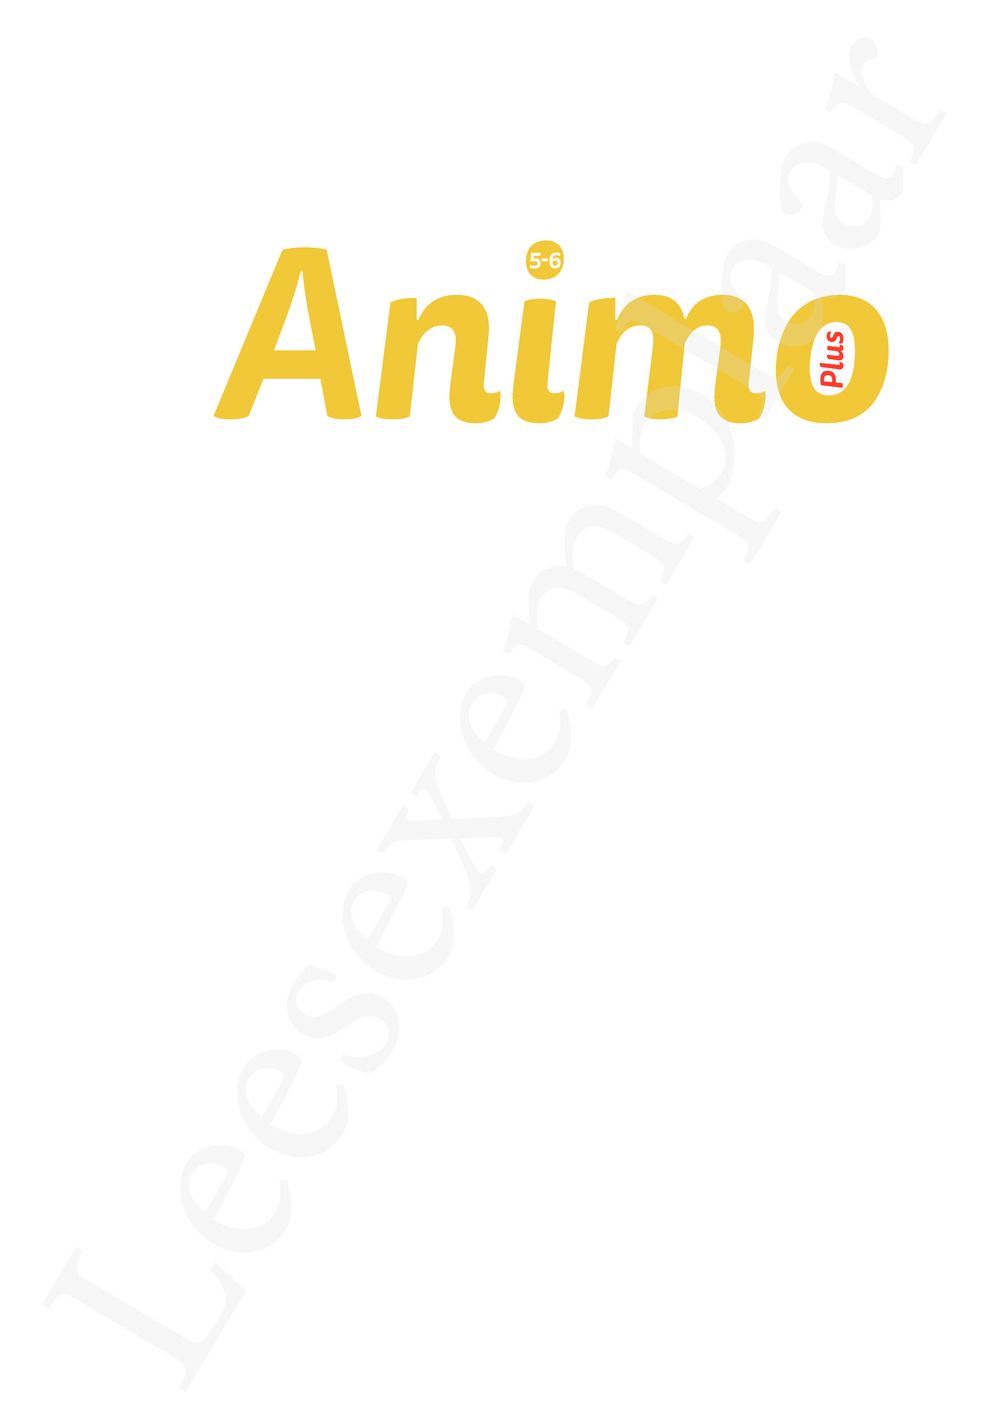 Preview: Animo 5-6 Plus Handboek (incl. Pelckmans Portaal)